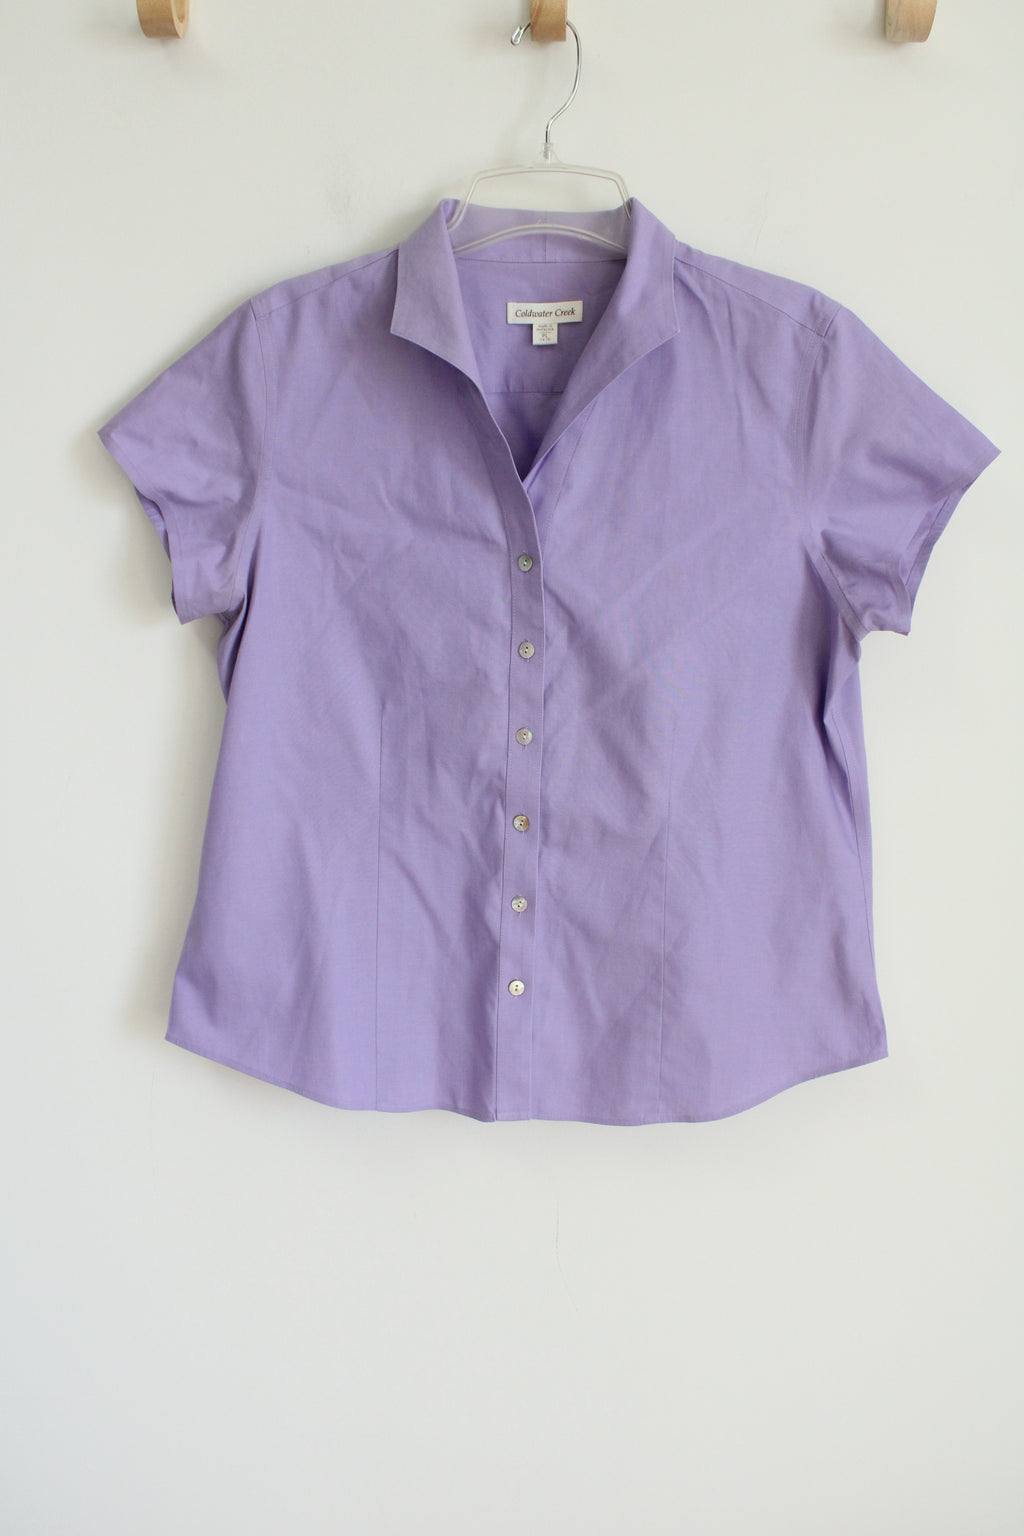 Coldwater Purple Button Down Shirt | L Petite